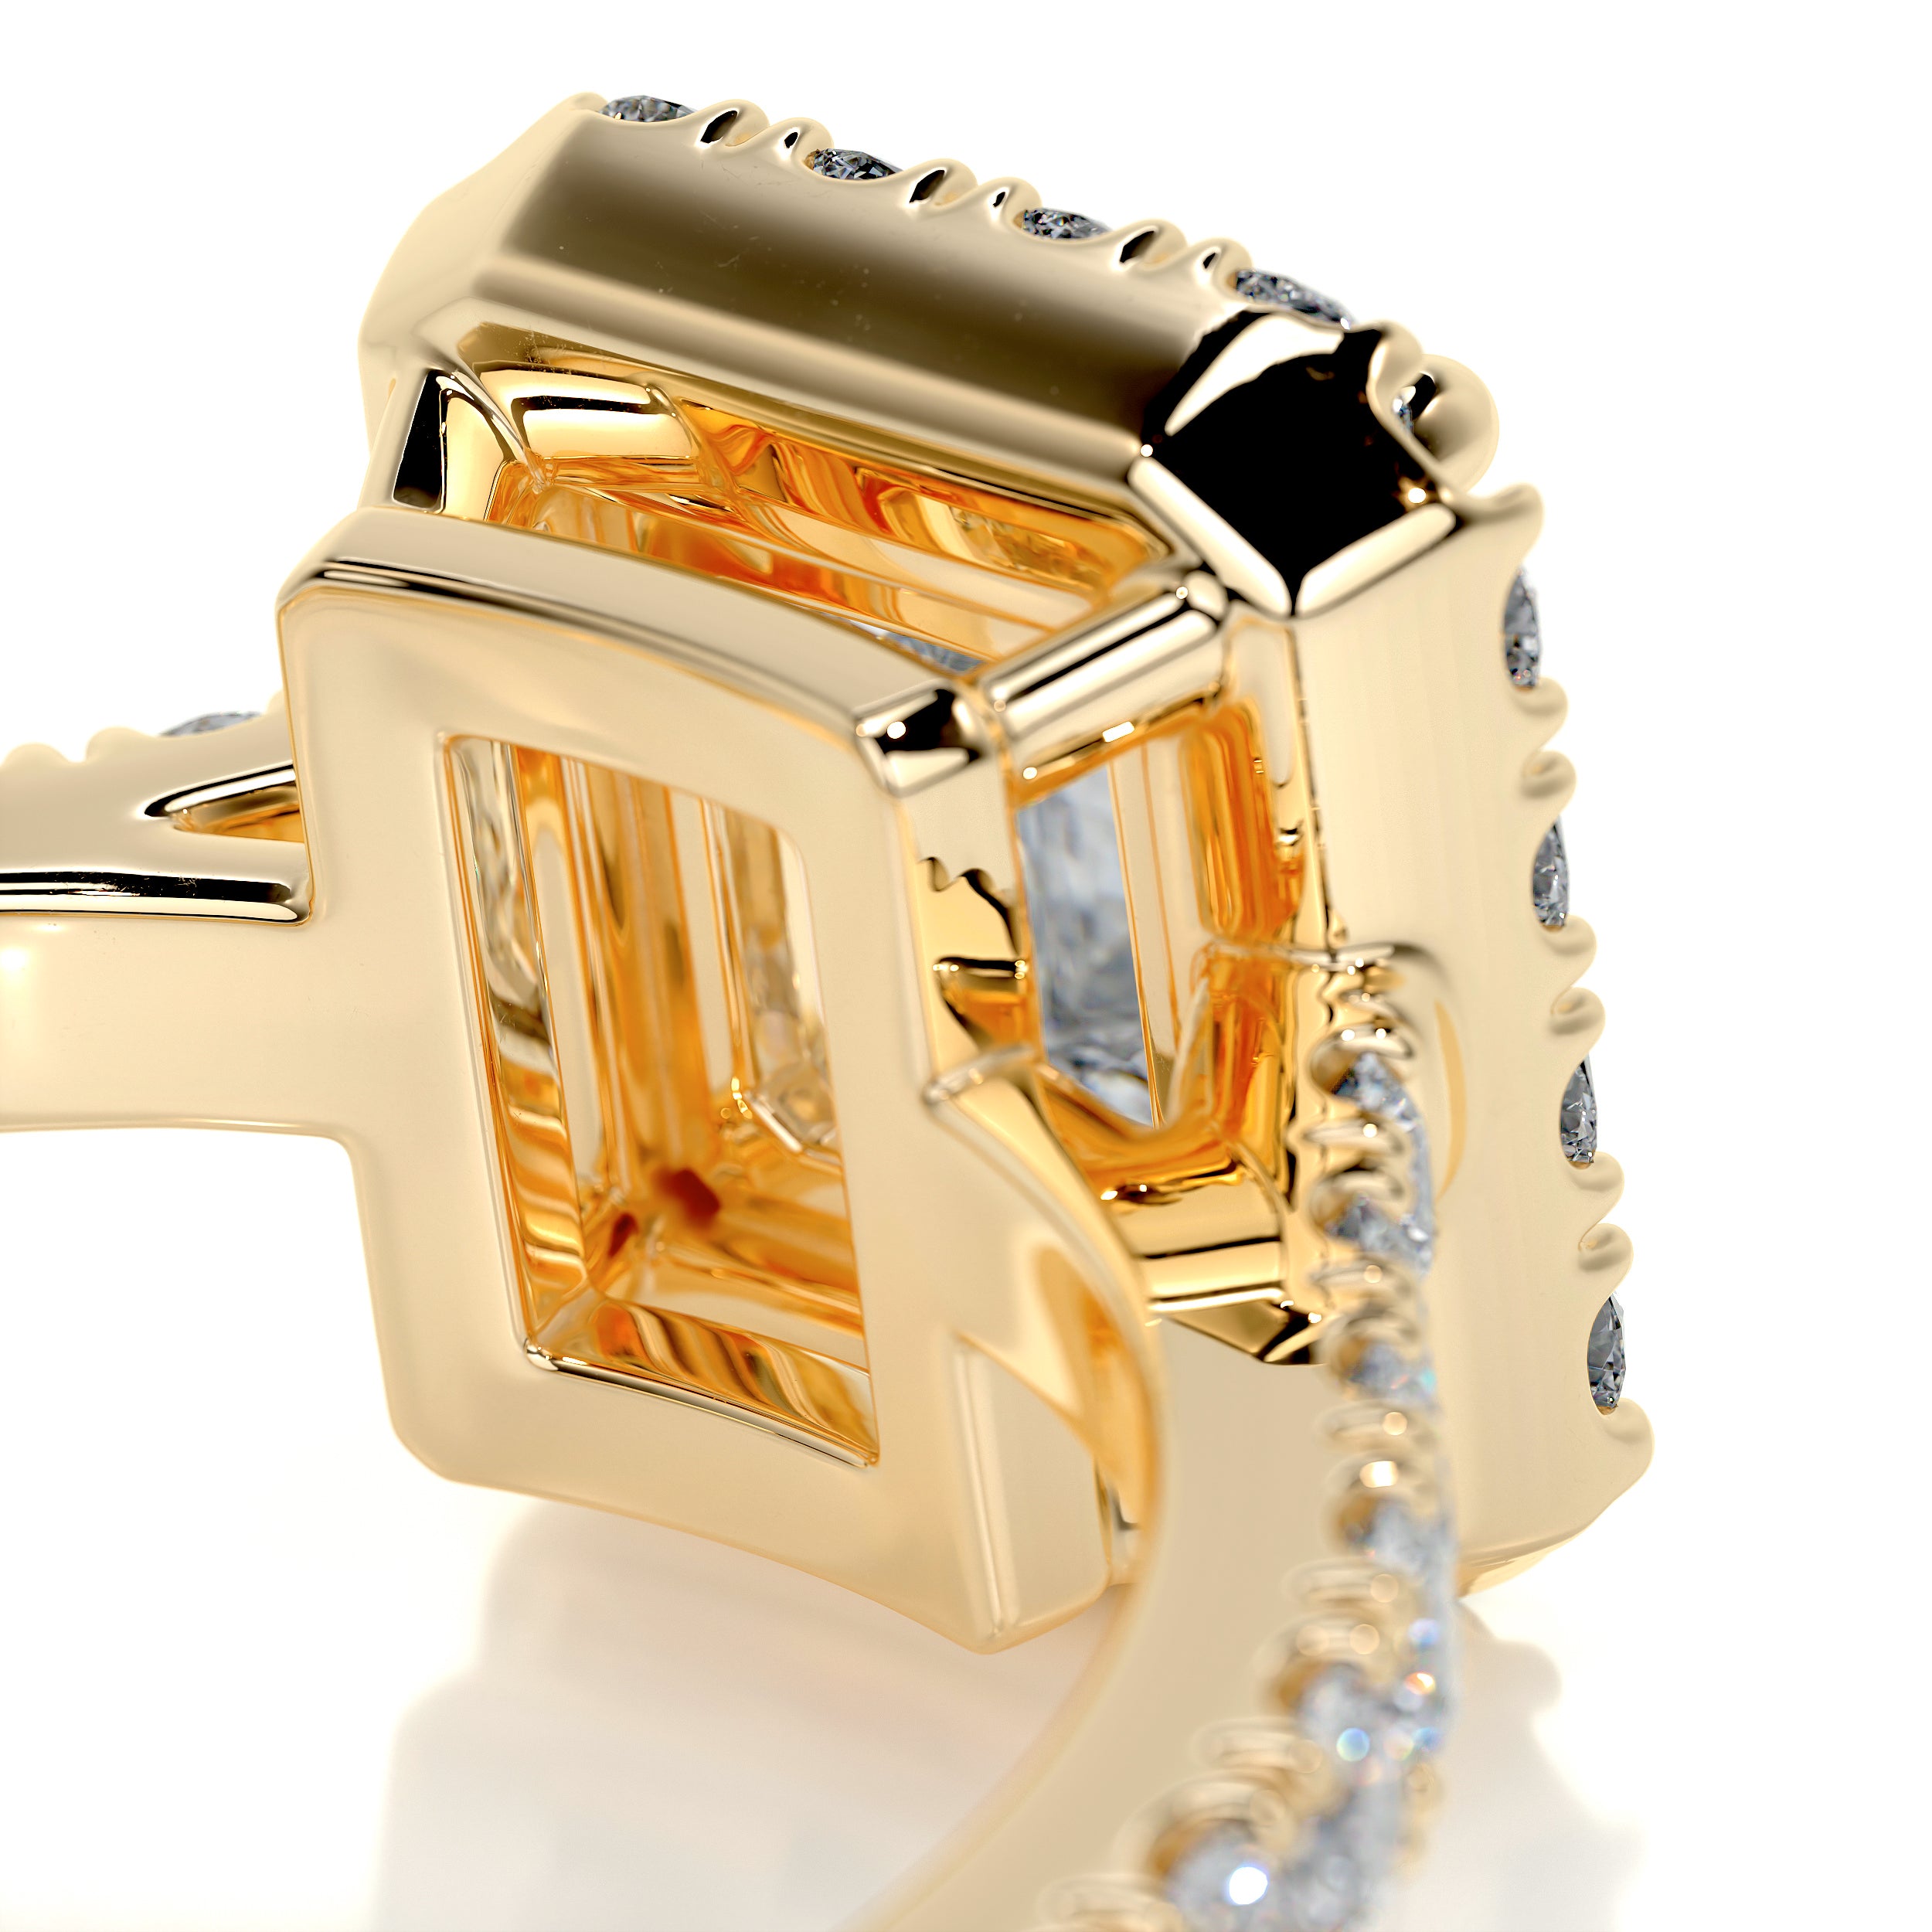 Zoey Diamond Engagement Ring -18K Yellow Gold